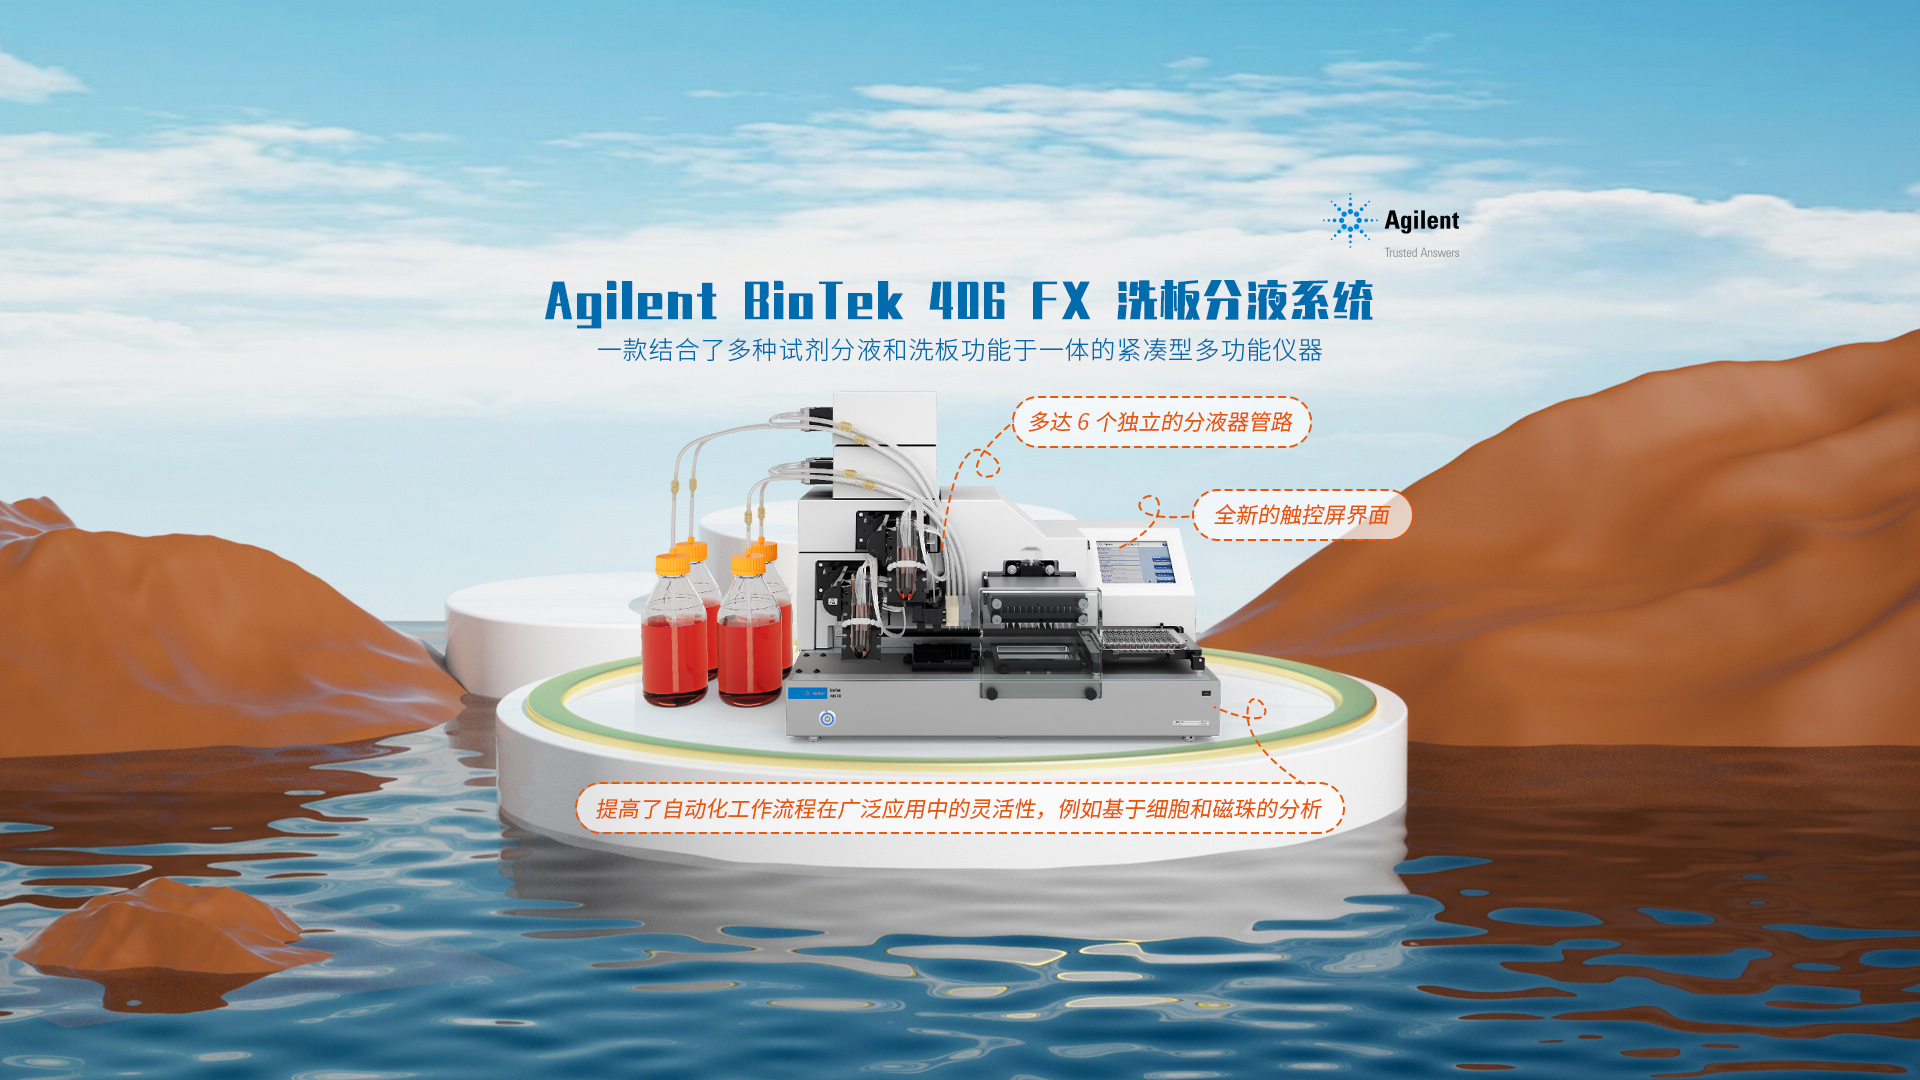 Agilent BioTek 406 FX 洗板分液系统